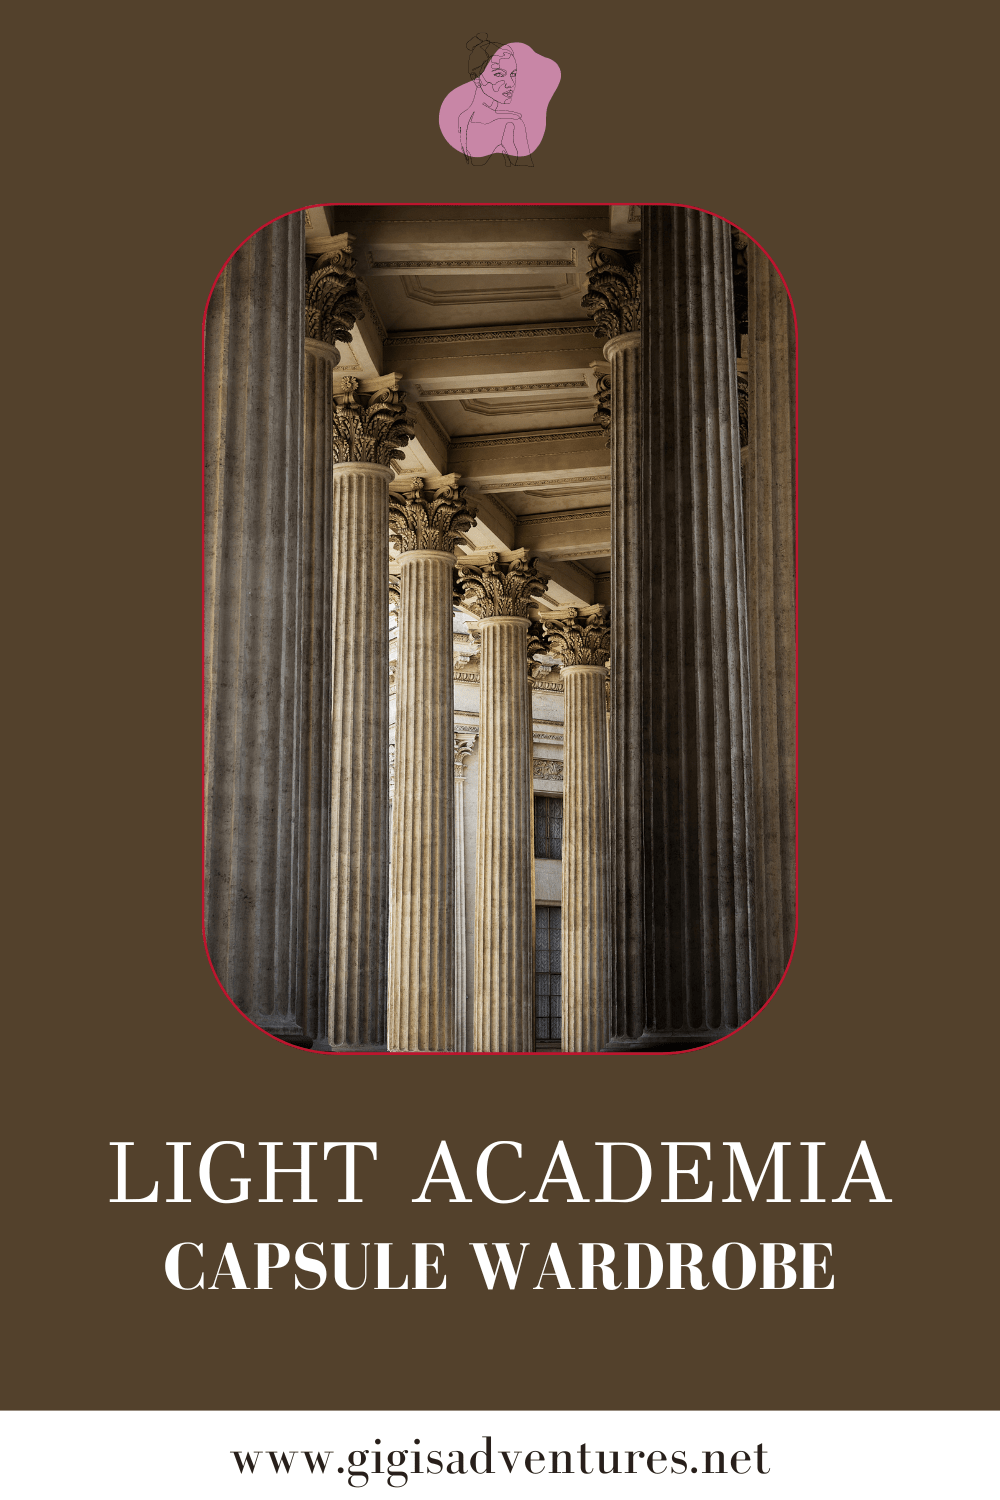 light academia, light academia aesthetic, light academia style, light academia fashion, light academia capsule wardrobe